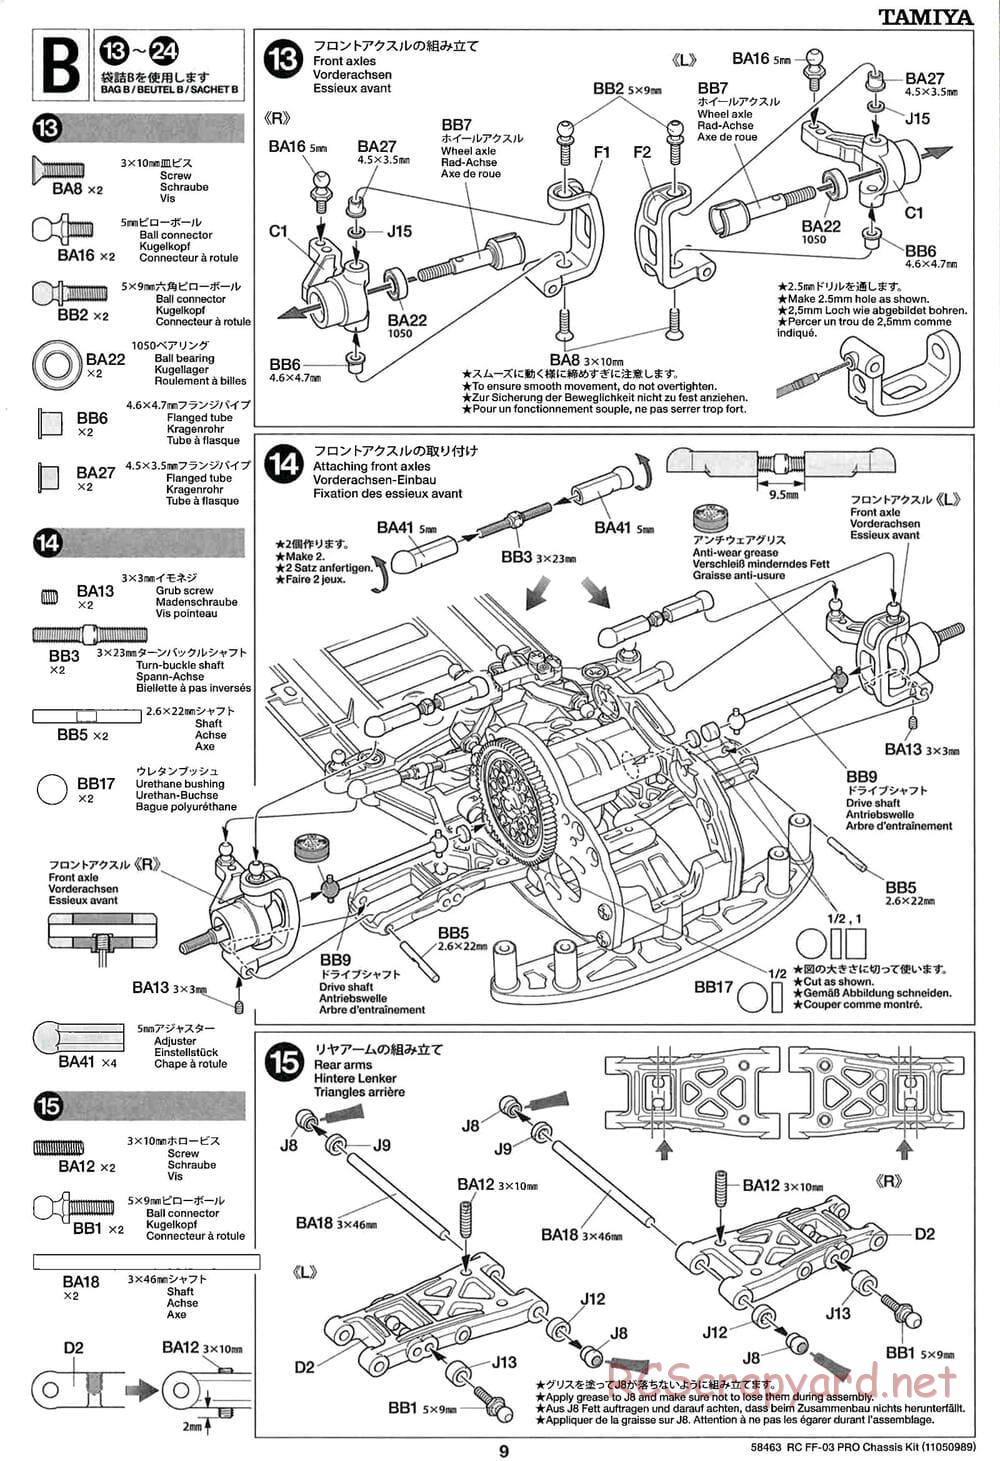 Tamiya - FF-03 Pro Chassis - Manual - Page 9